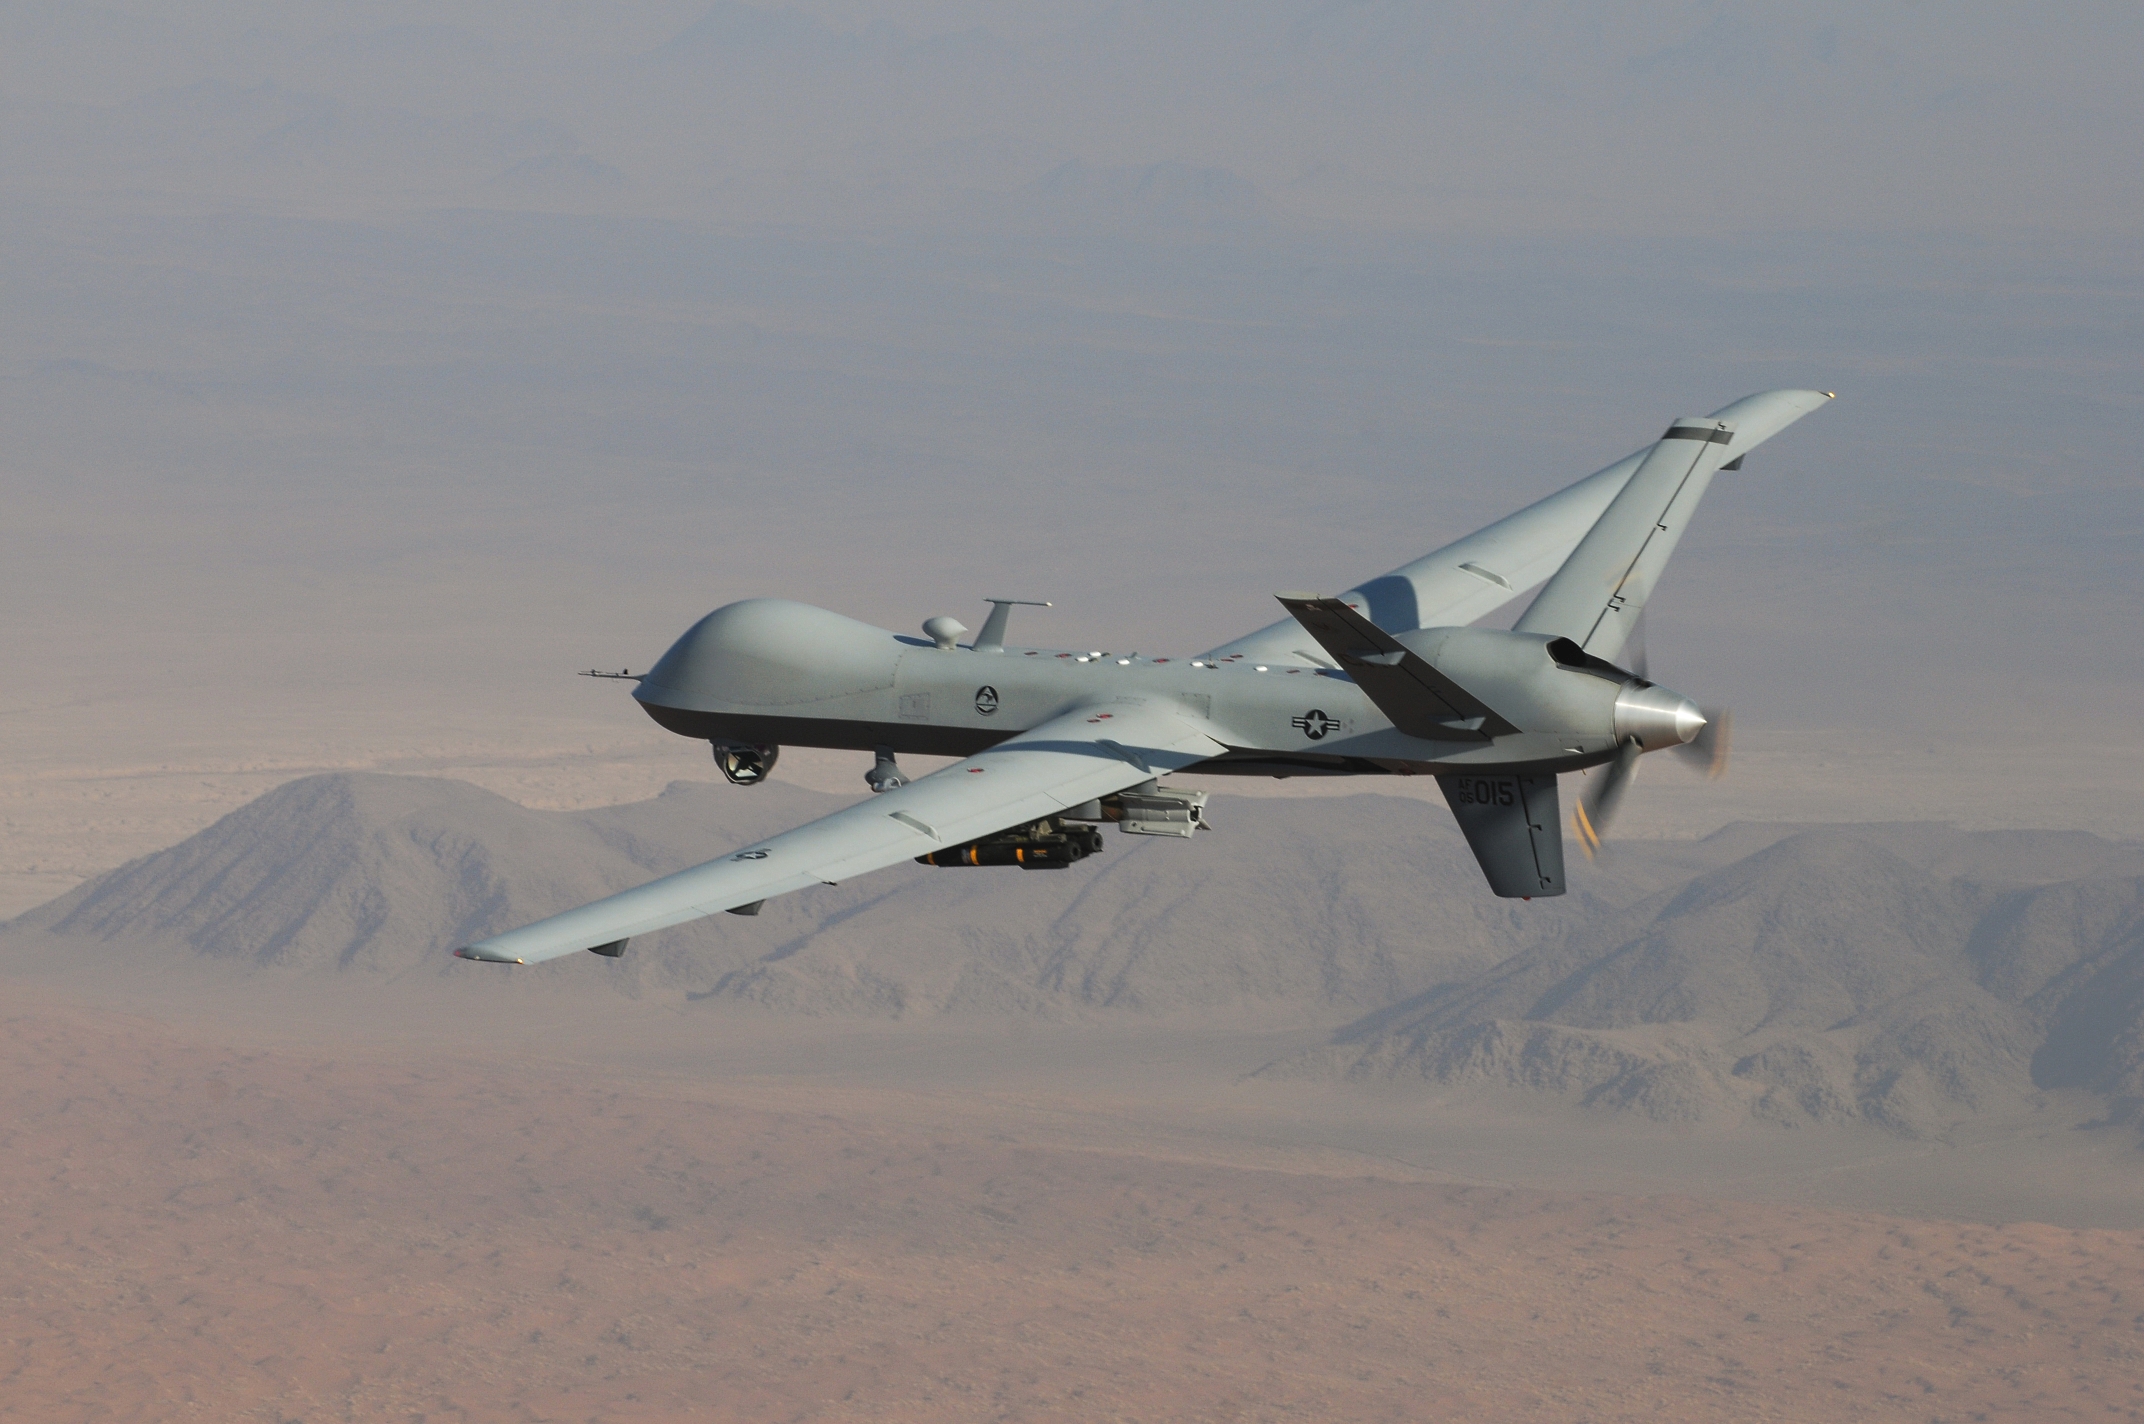 General 2144x1424 US Air Force aircraft military aircraft vehicle UAVs military vehicle drone MQ-9 Reaper American aircraft